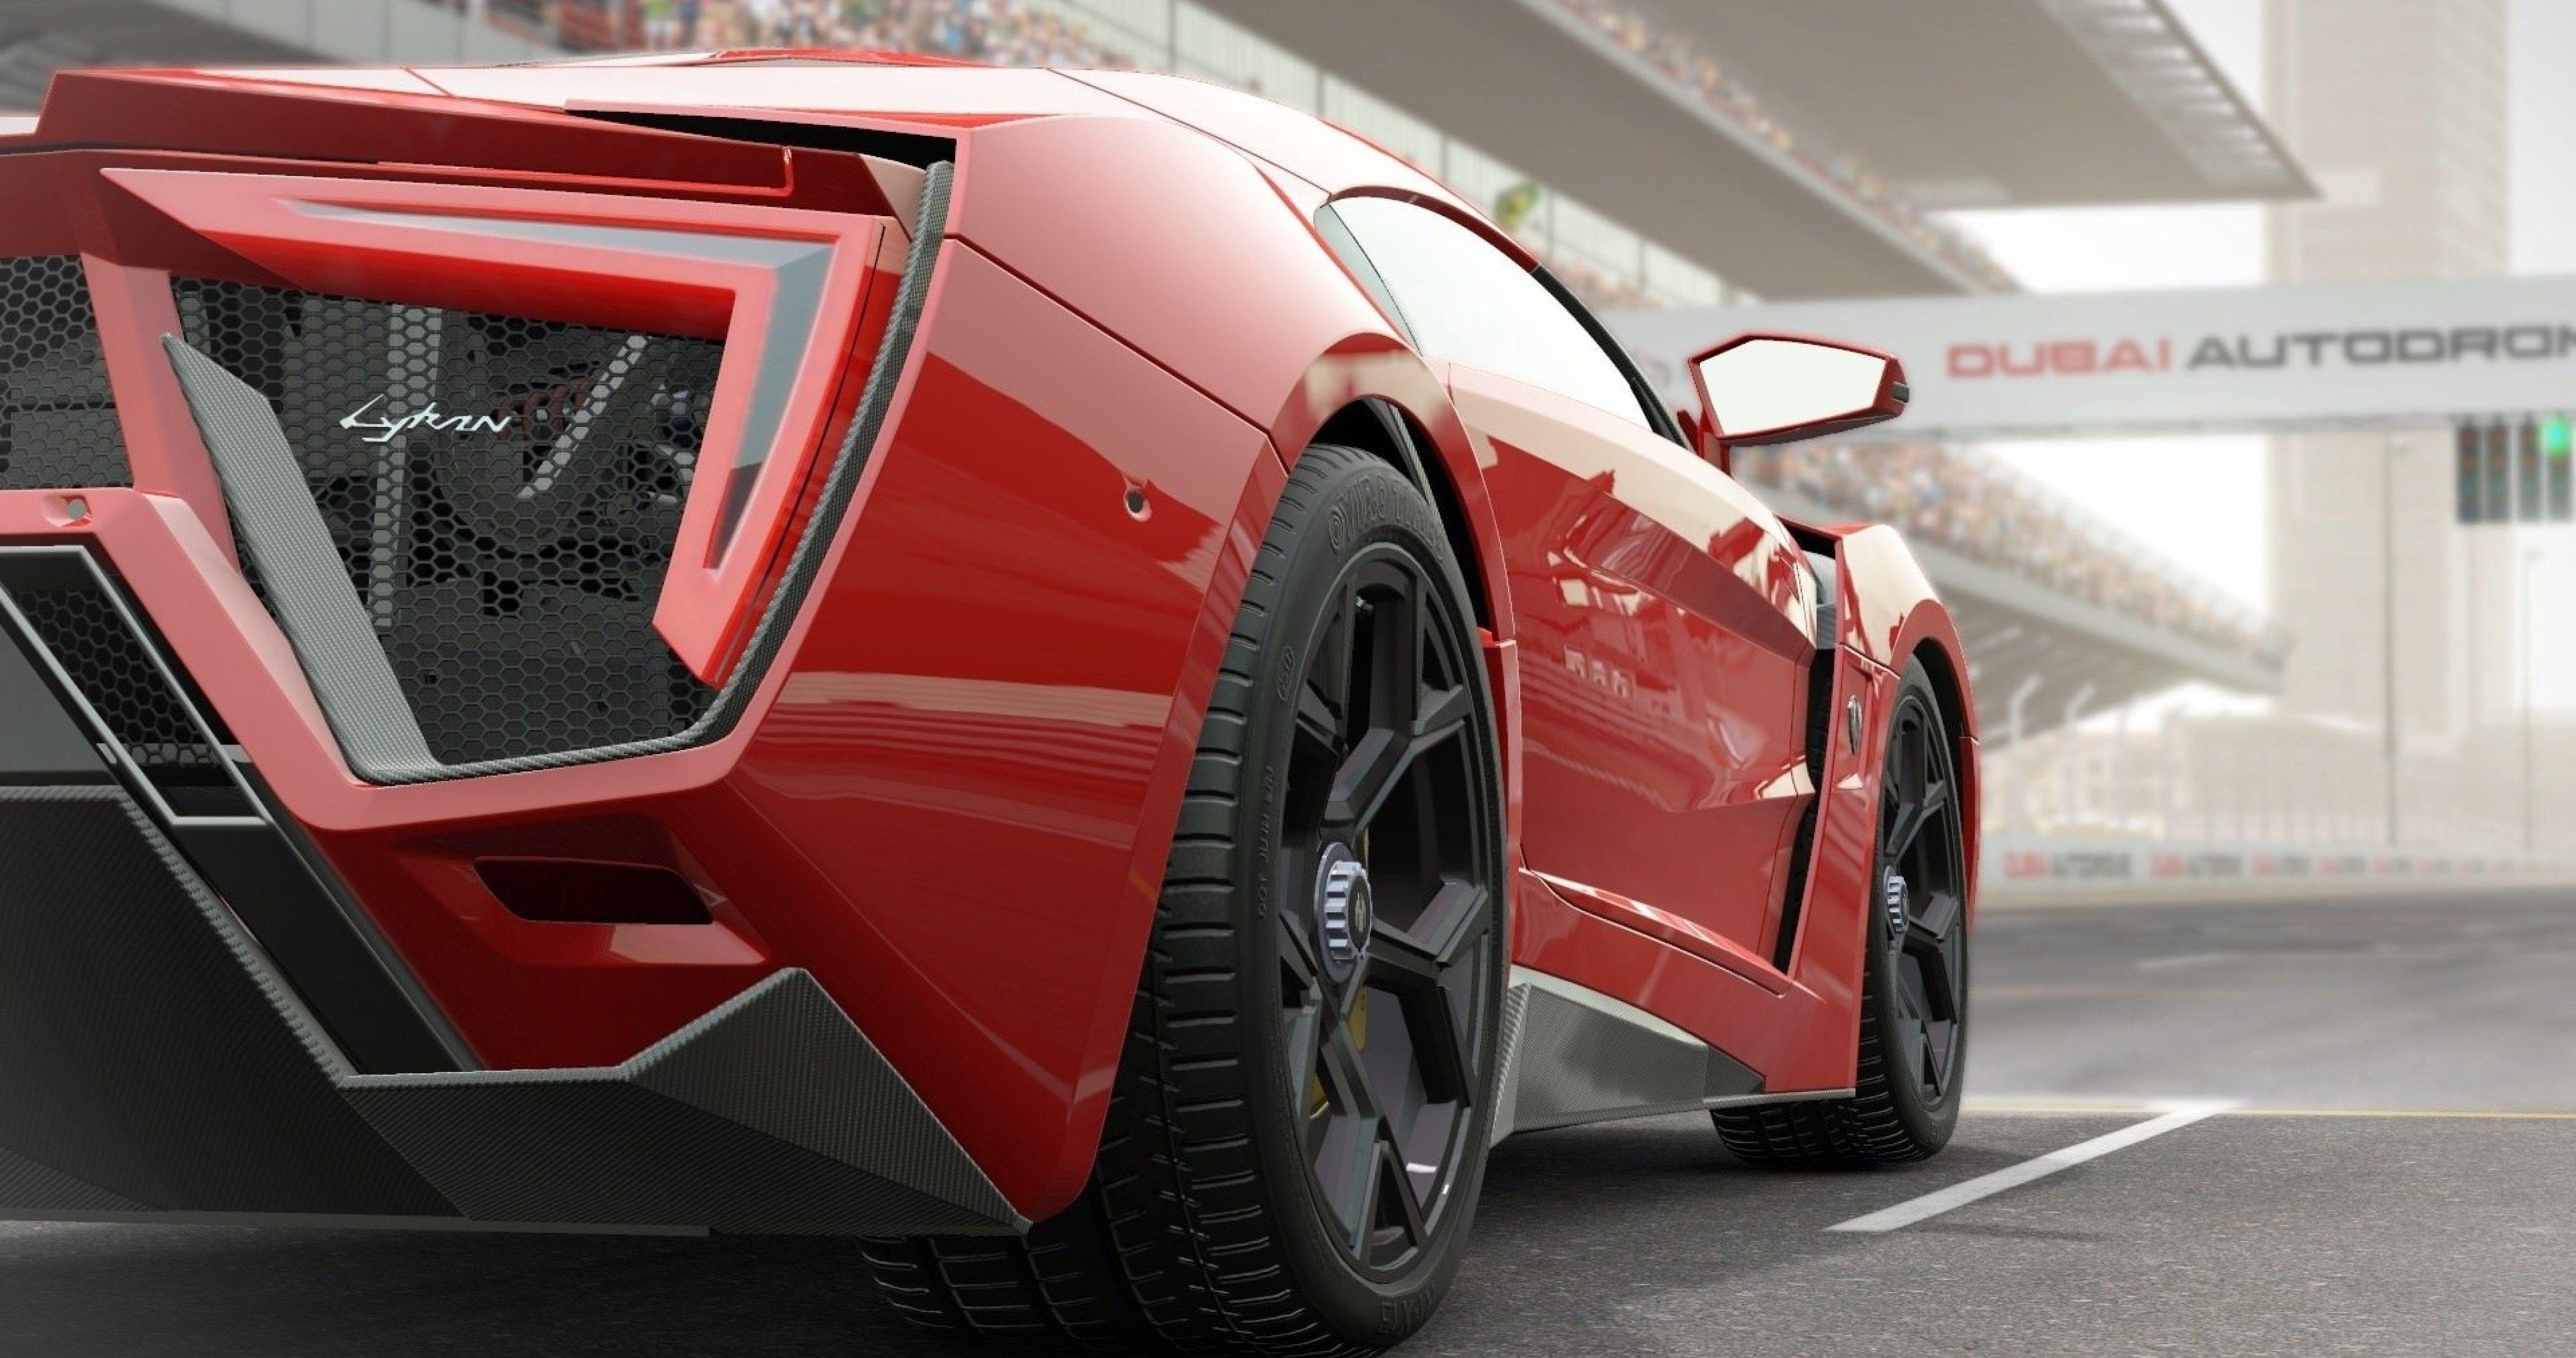 project cars game 4k ultra HD 2019 Cars, 2020 Cars, 4k, 4K 5K, 4k